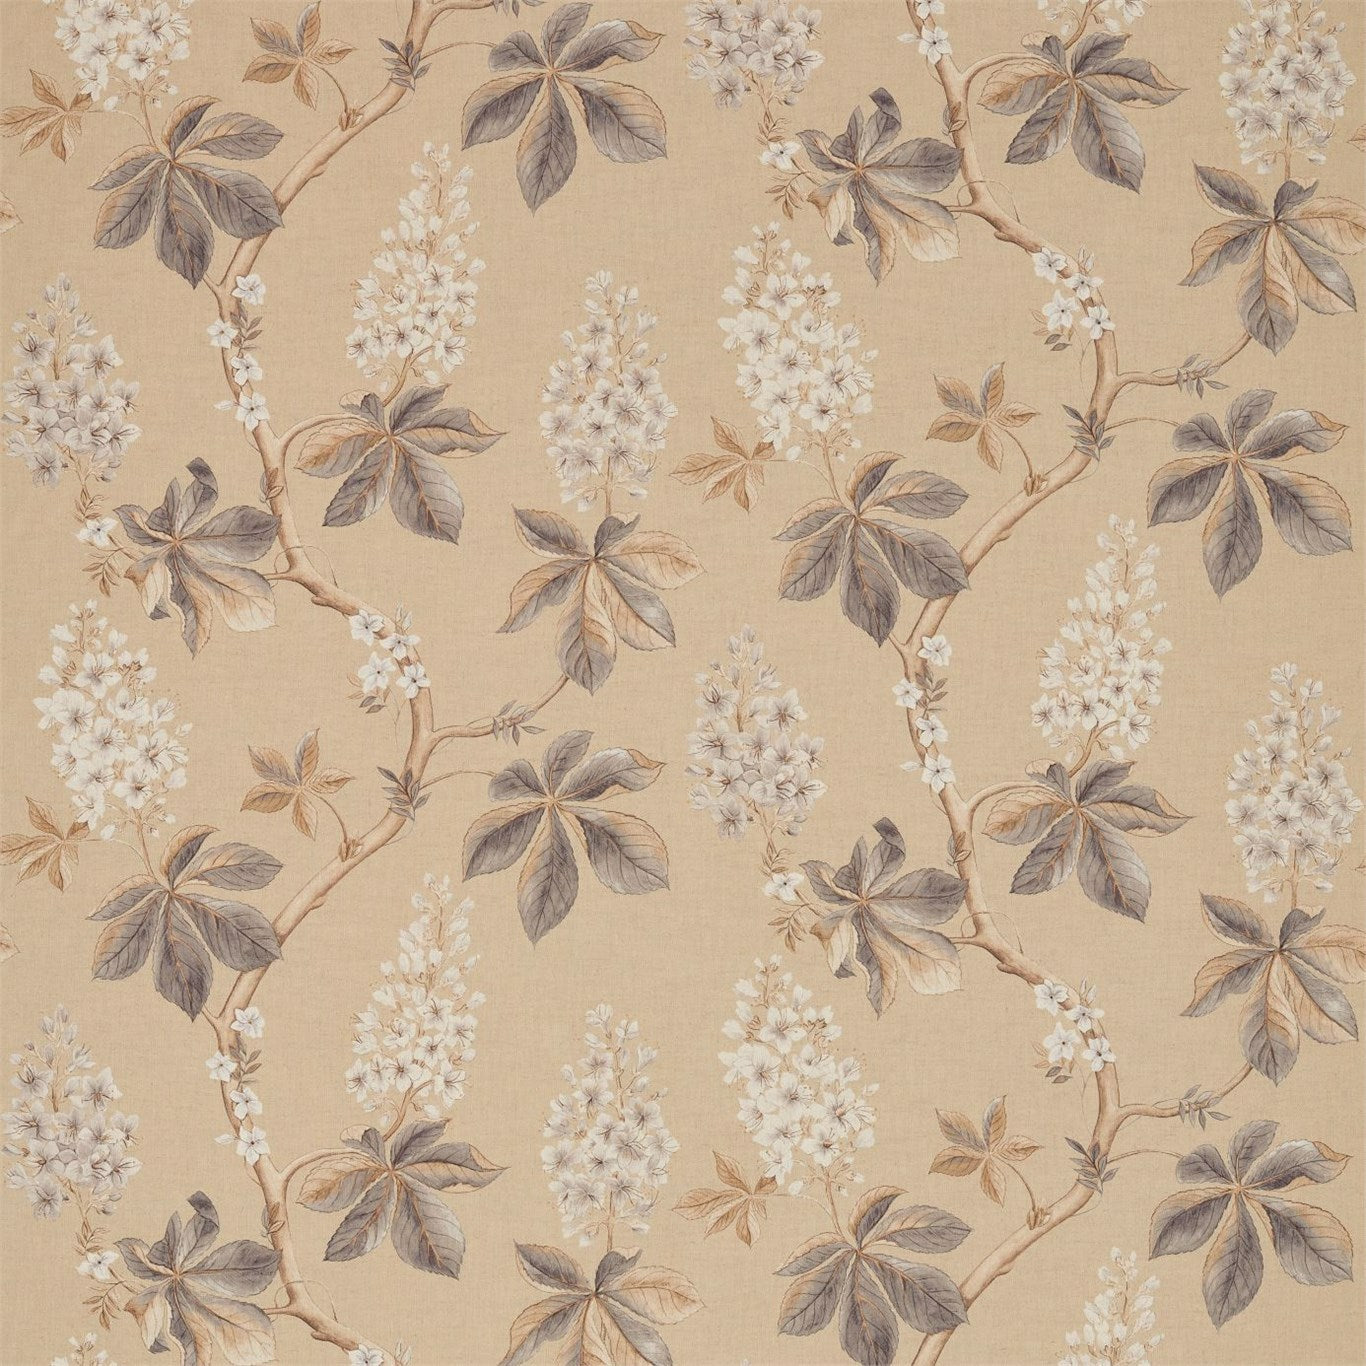 Chestnut Tree Fabric by Sanderson - DWOW225514 - Wheat/Pebble